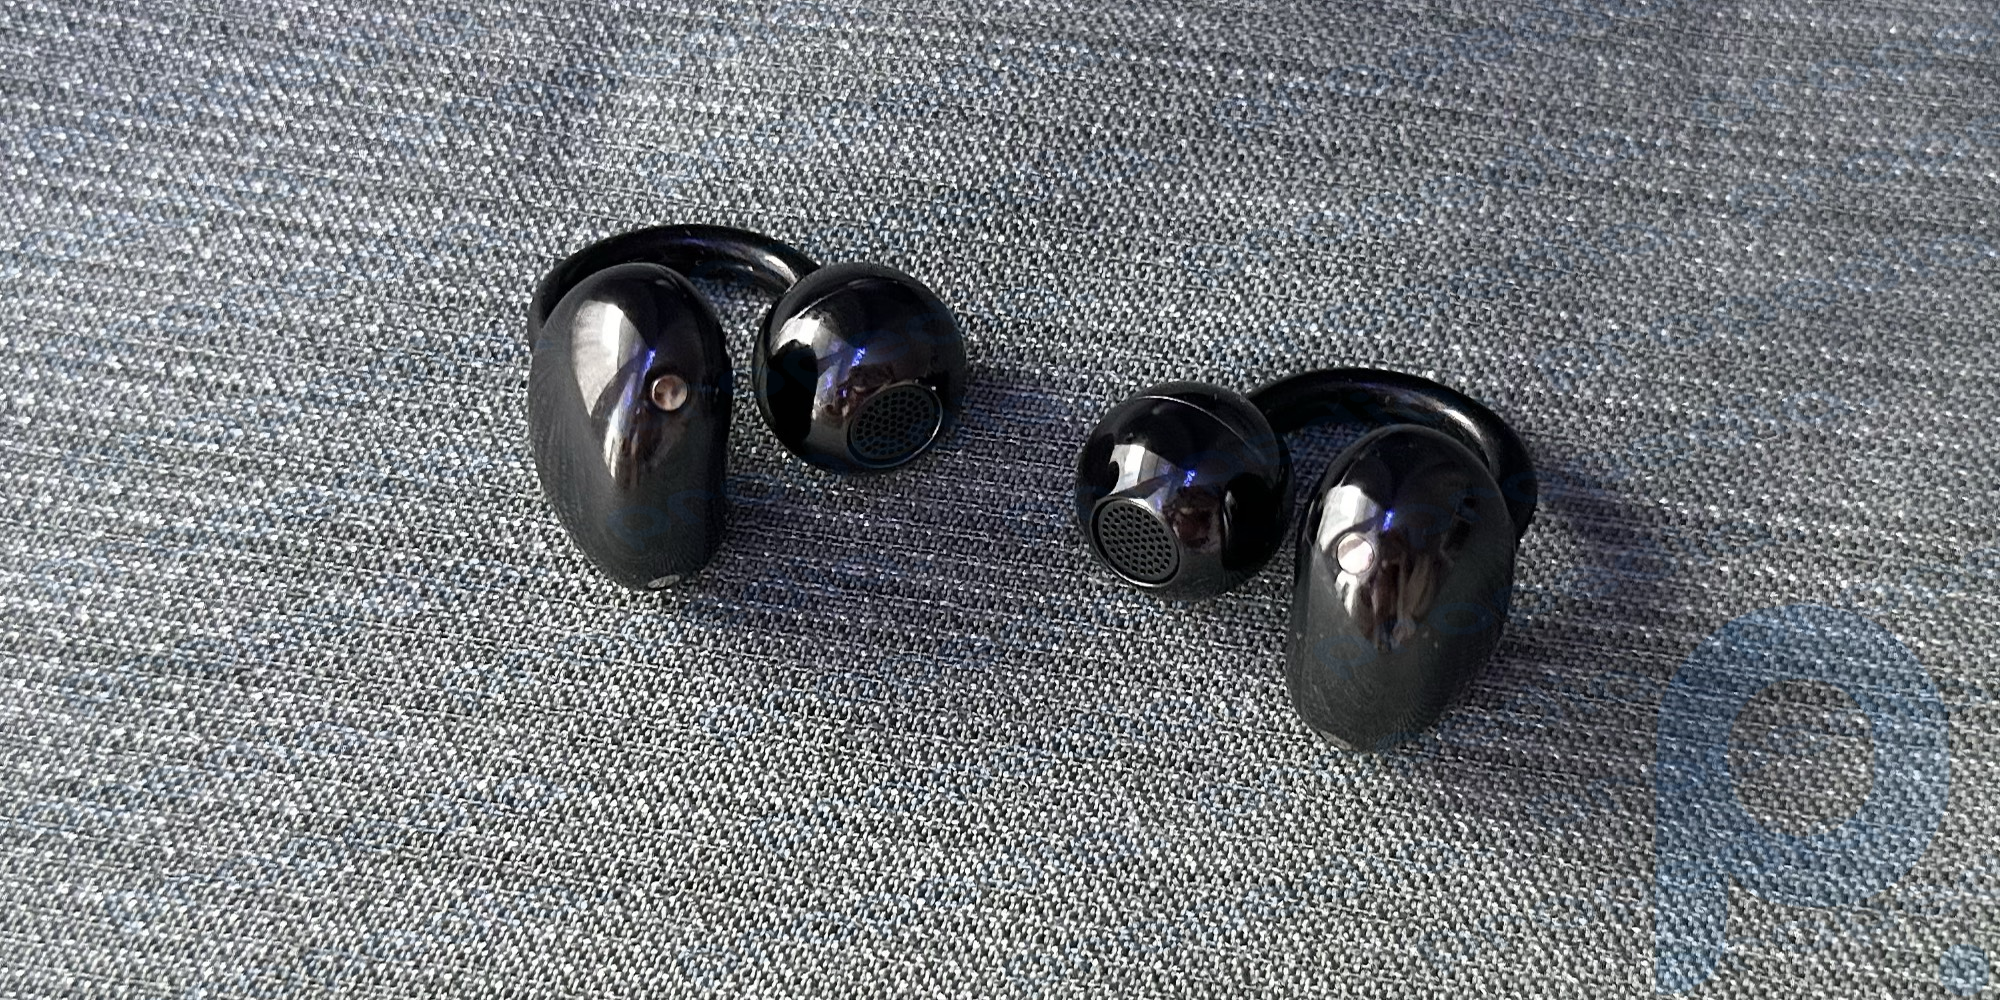 Each Huawei FreeClip earphone looks like a bean and a ball